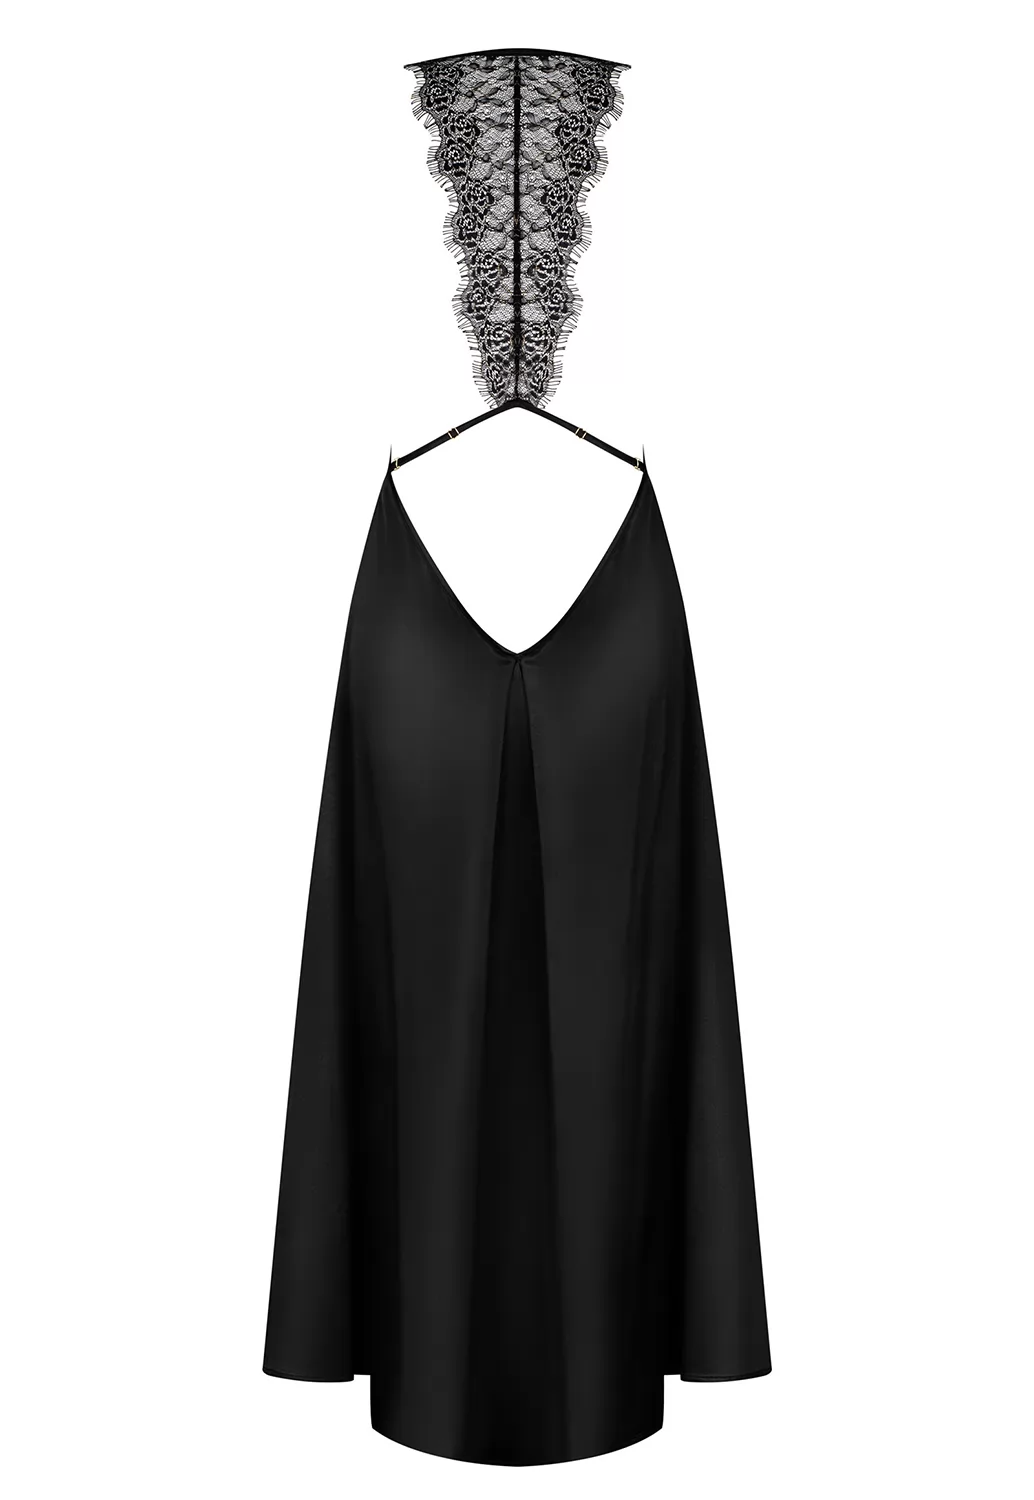 Agatya long black satin Dress